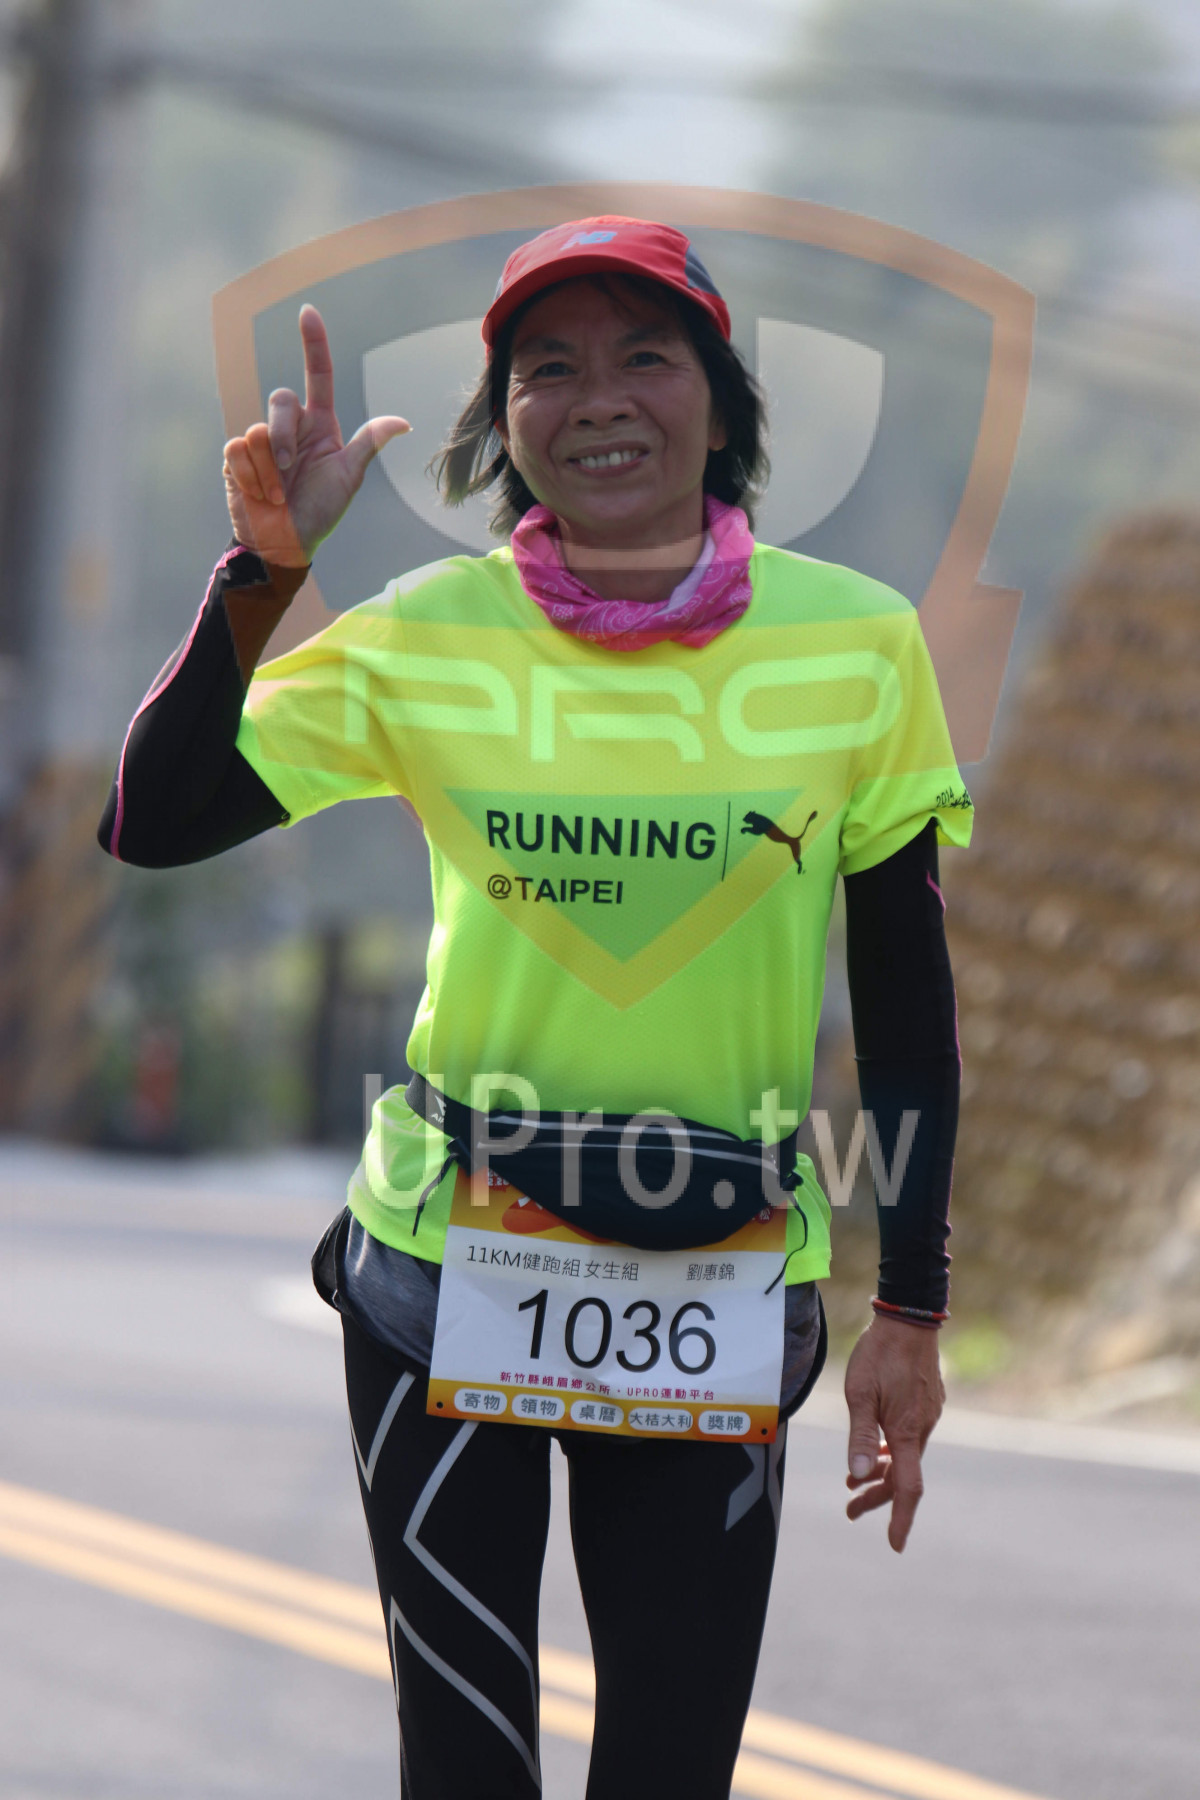 RUNNING,@TAIPEI,11KM -,,1036,, UPRO|